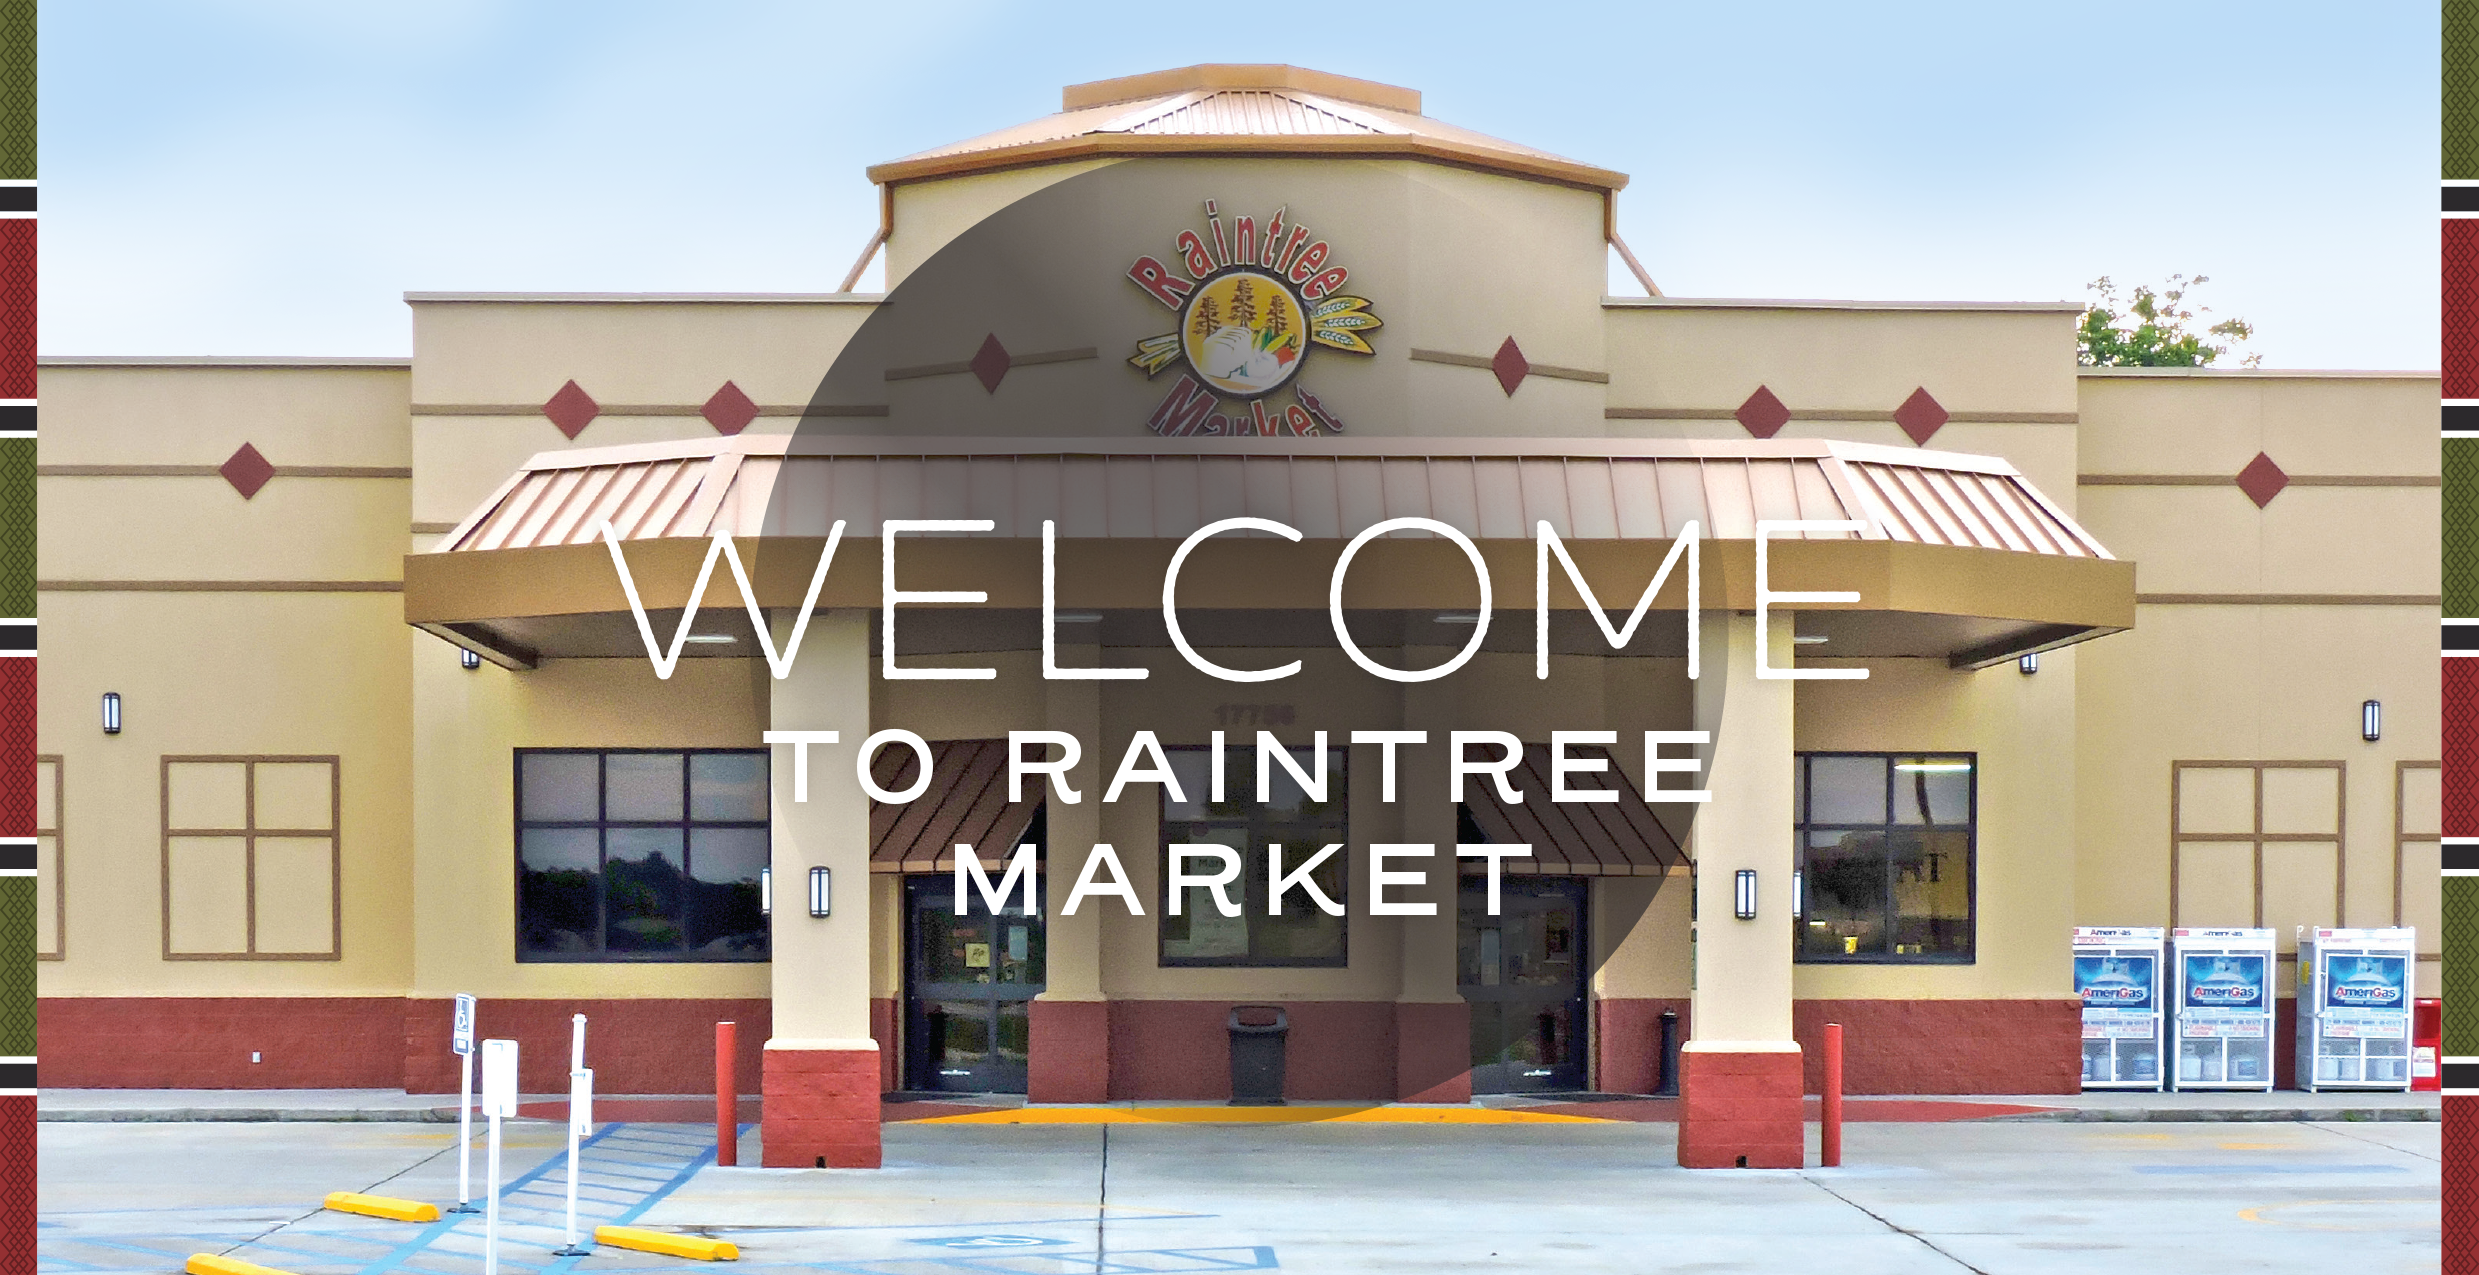 Welcome to Raintree Market